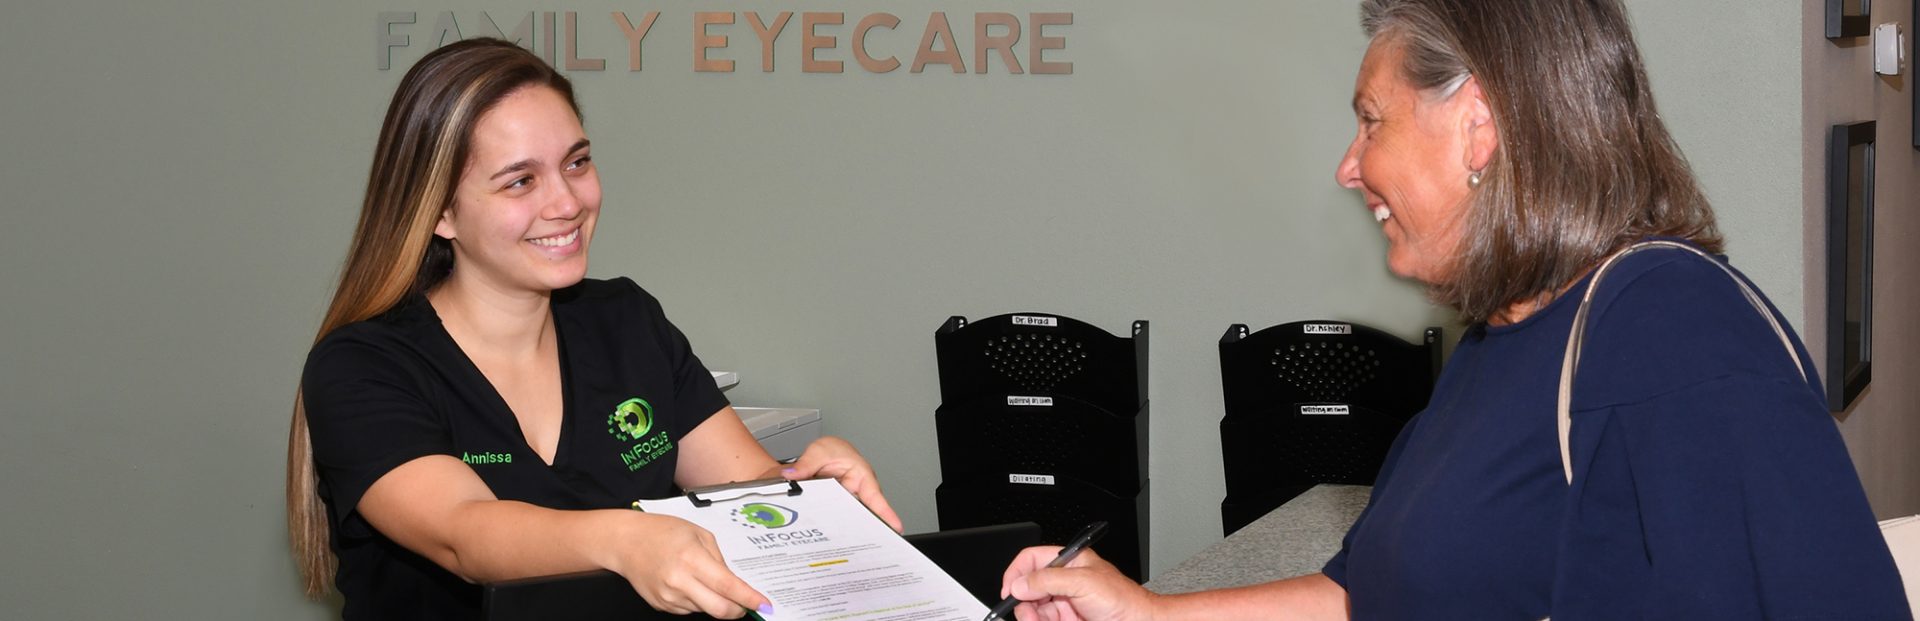 InFocus Eyecare